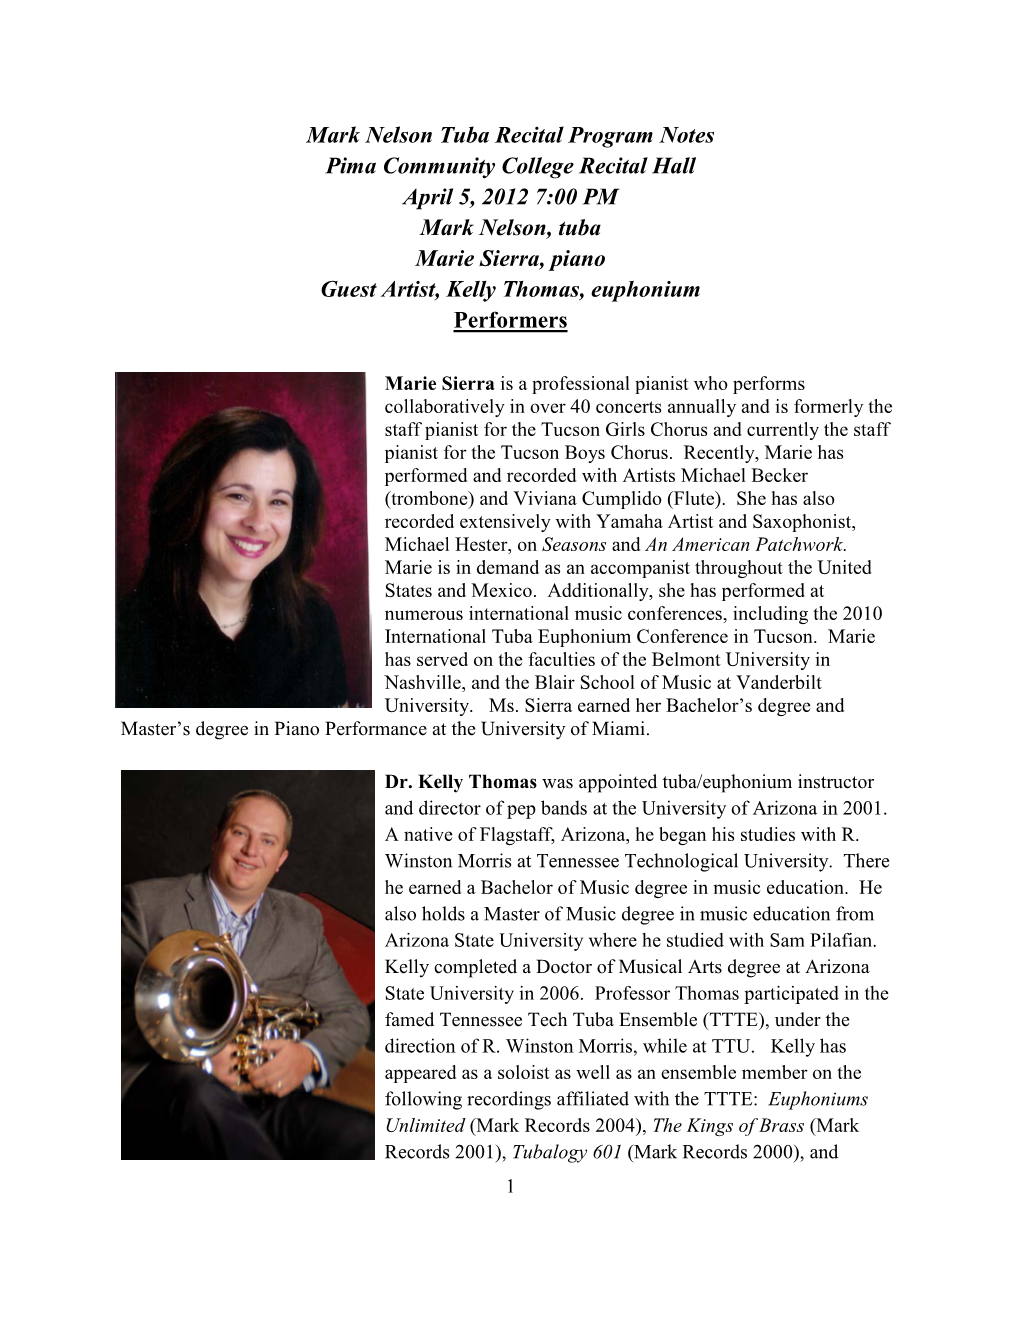 Program Notes Pima Community College Recital Hall April 5, 2012 7:00 PM Mark Nelson, Tuba Marie Sierra, Piano Guest Artist, Kelly Thomas, Euphonium Performers